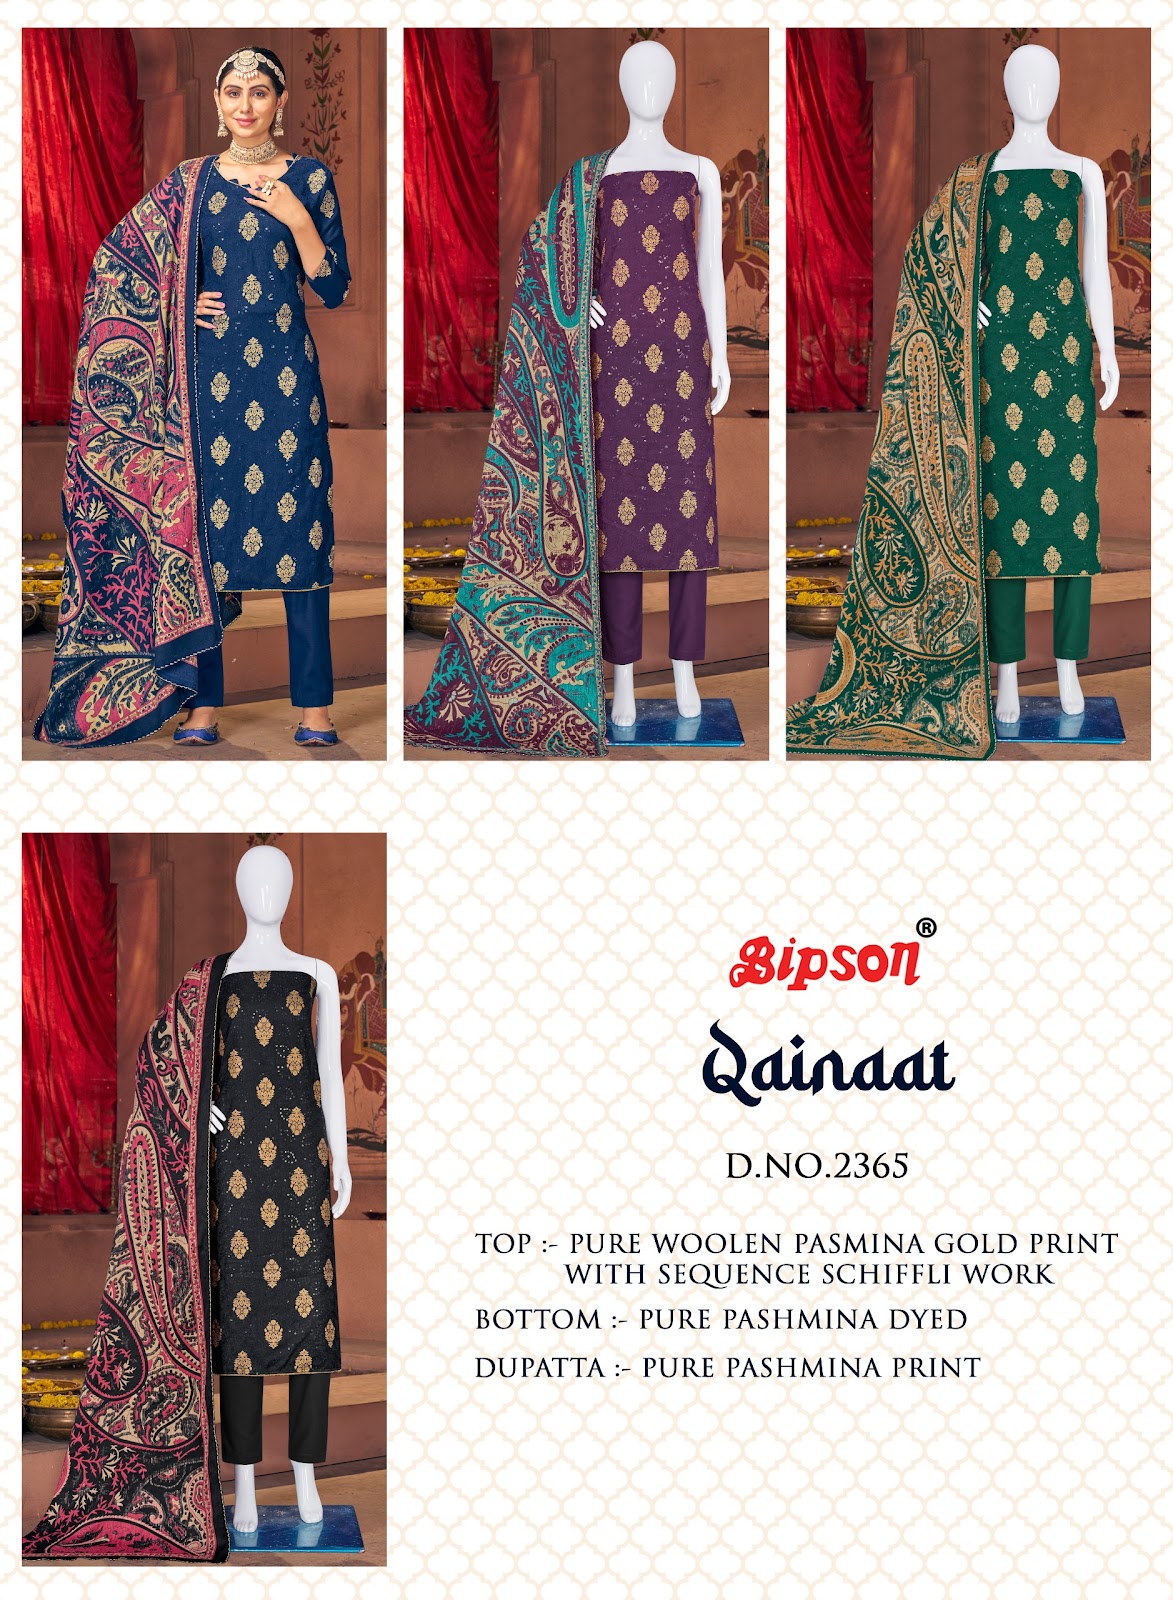 Qainaat 2365 Bipson Prints Pashmina Suits